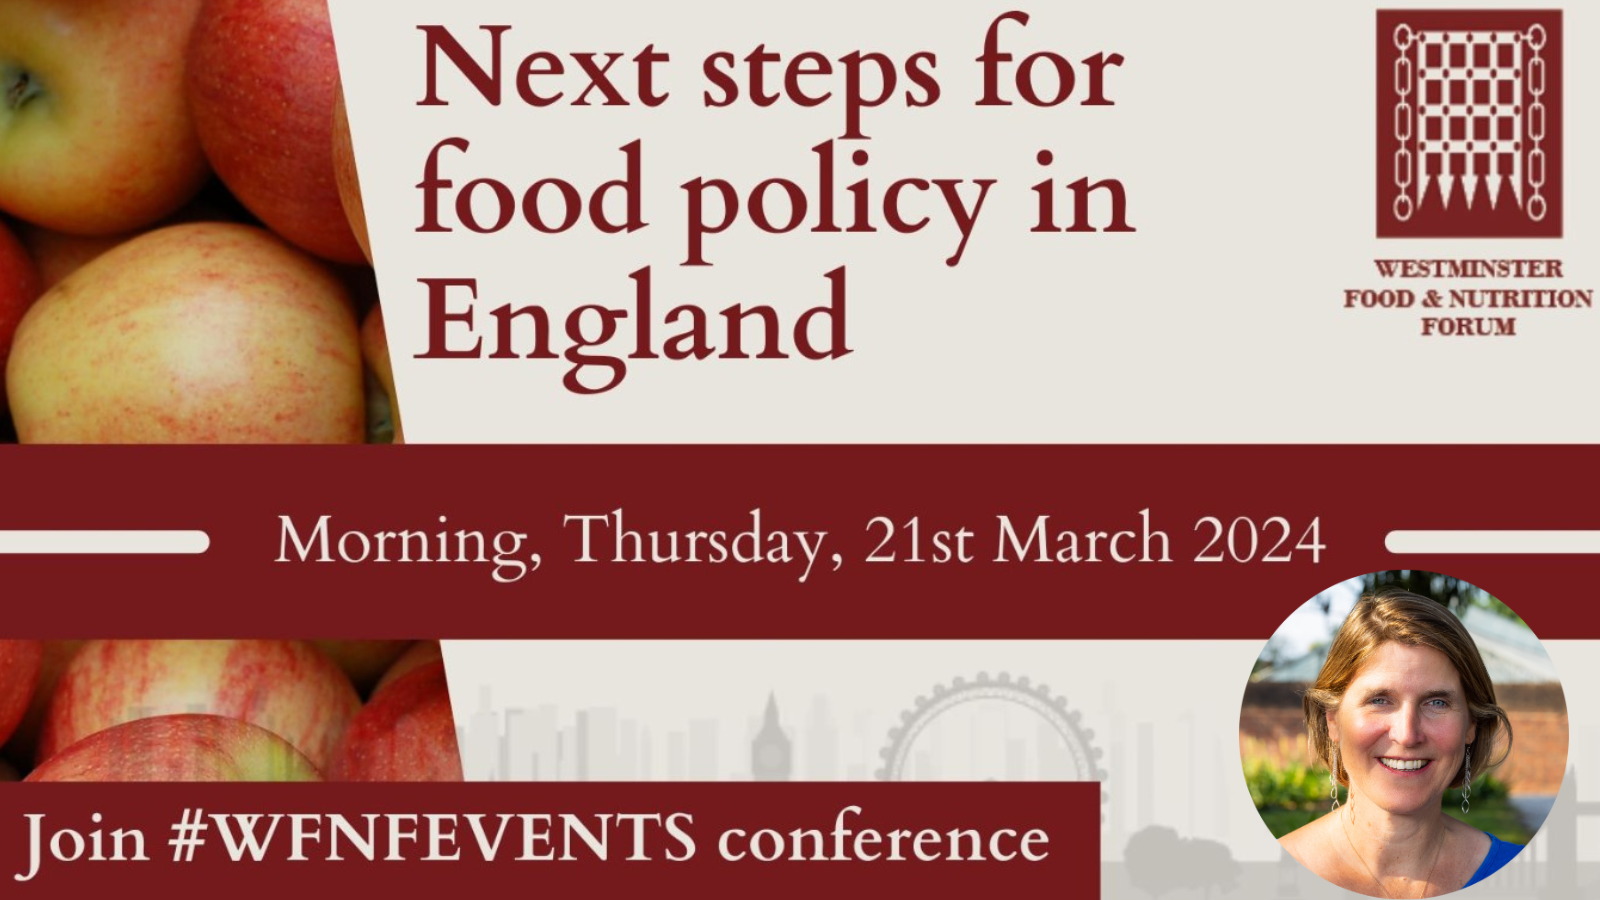 Westminster Food & Nutrition Forum